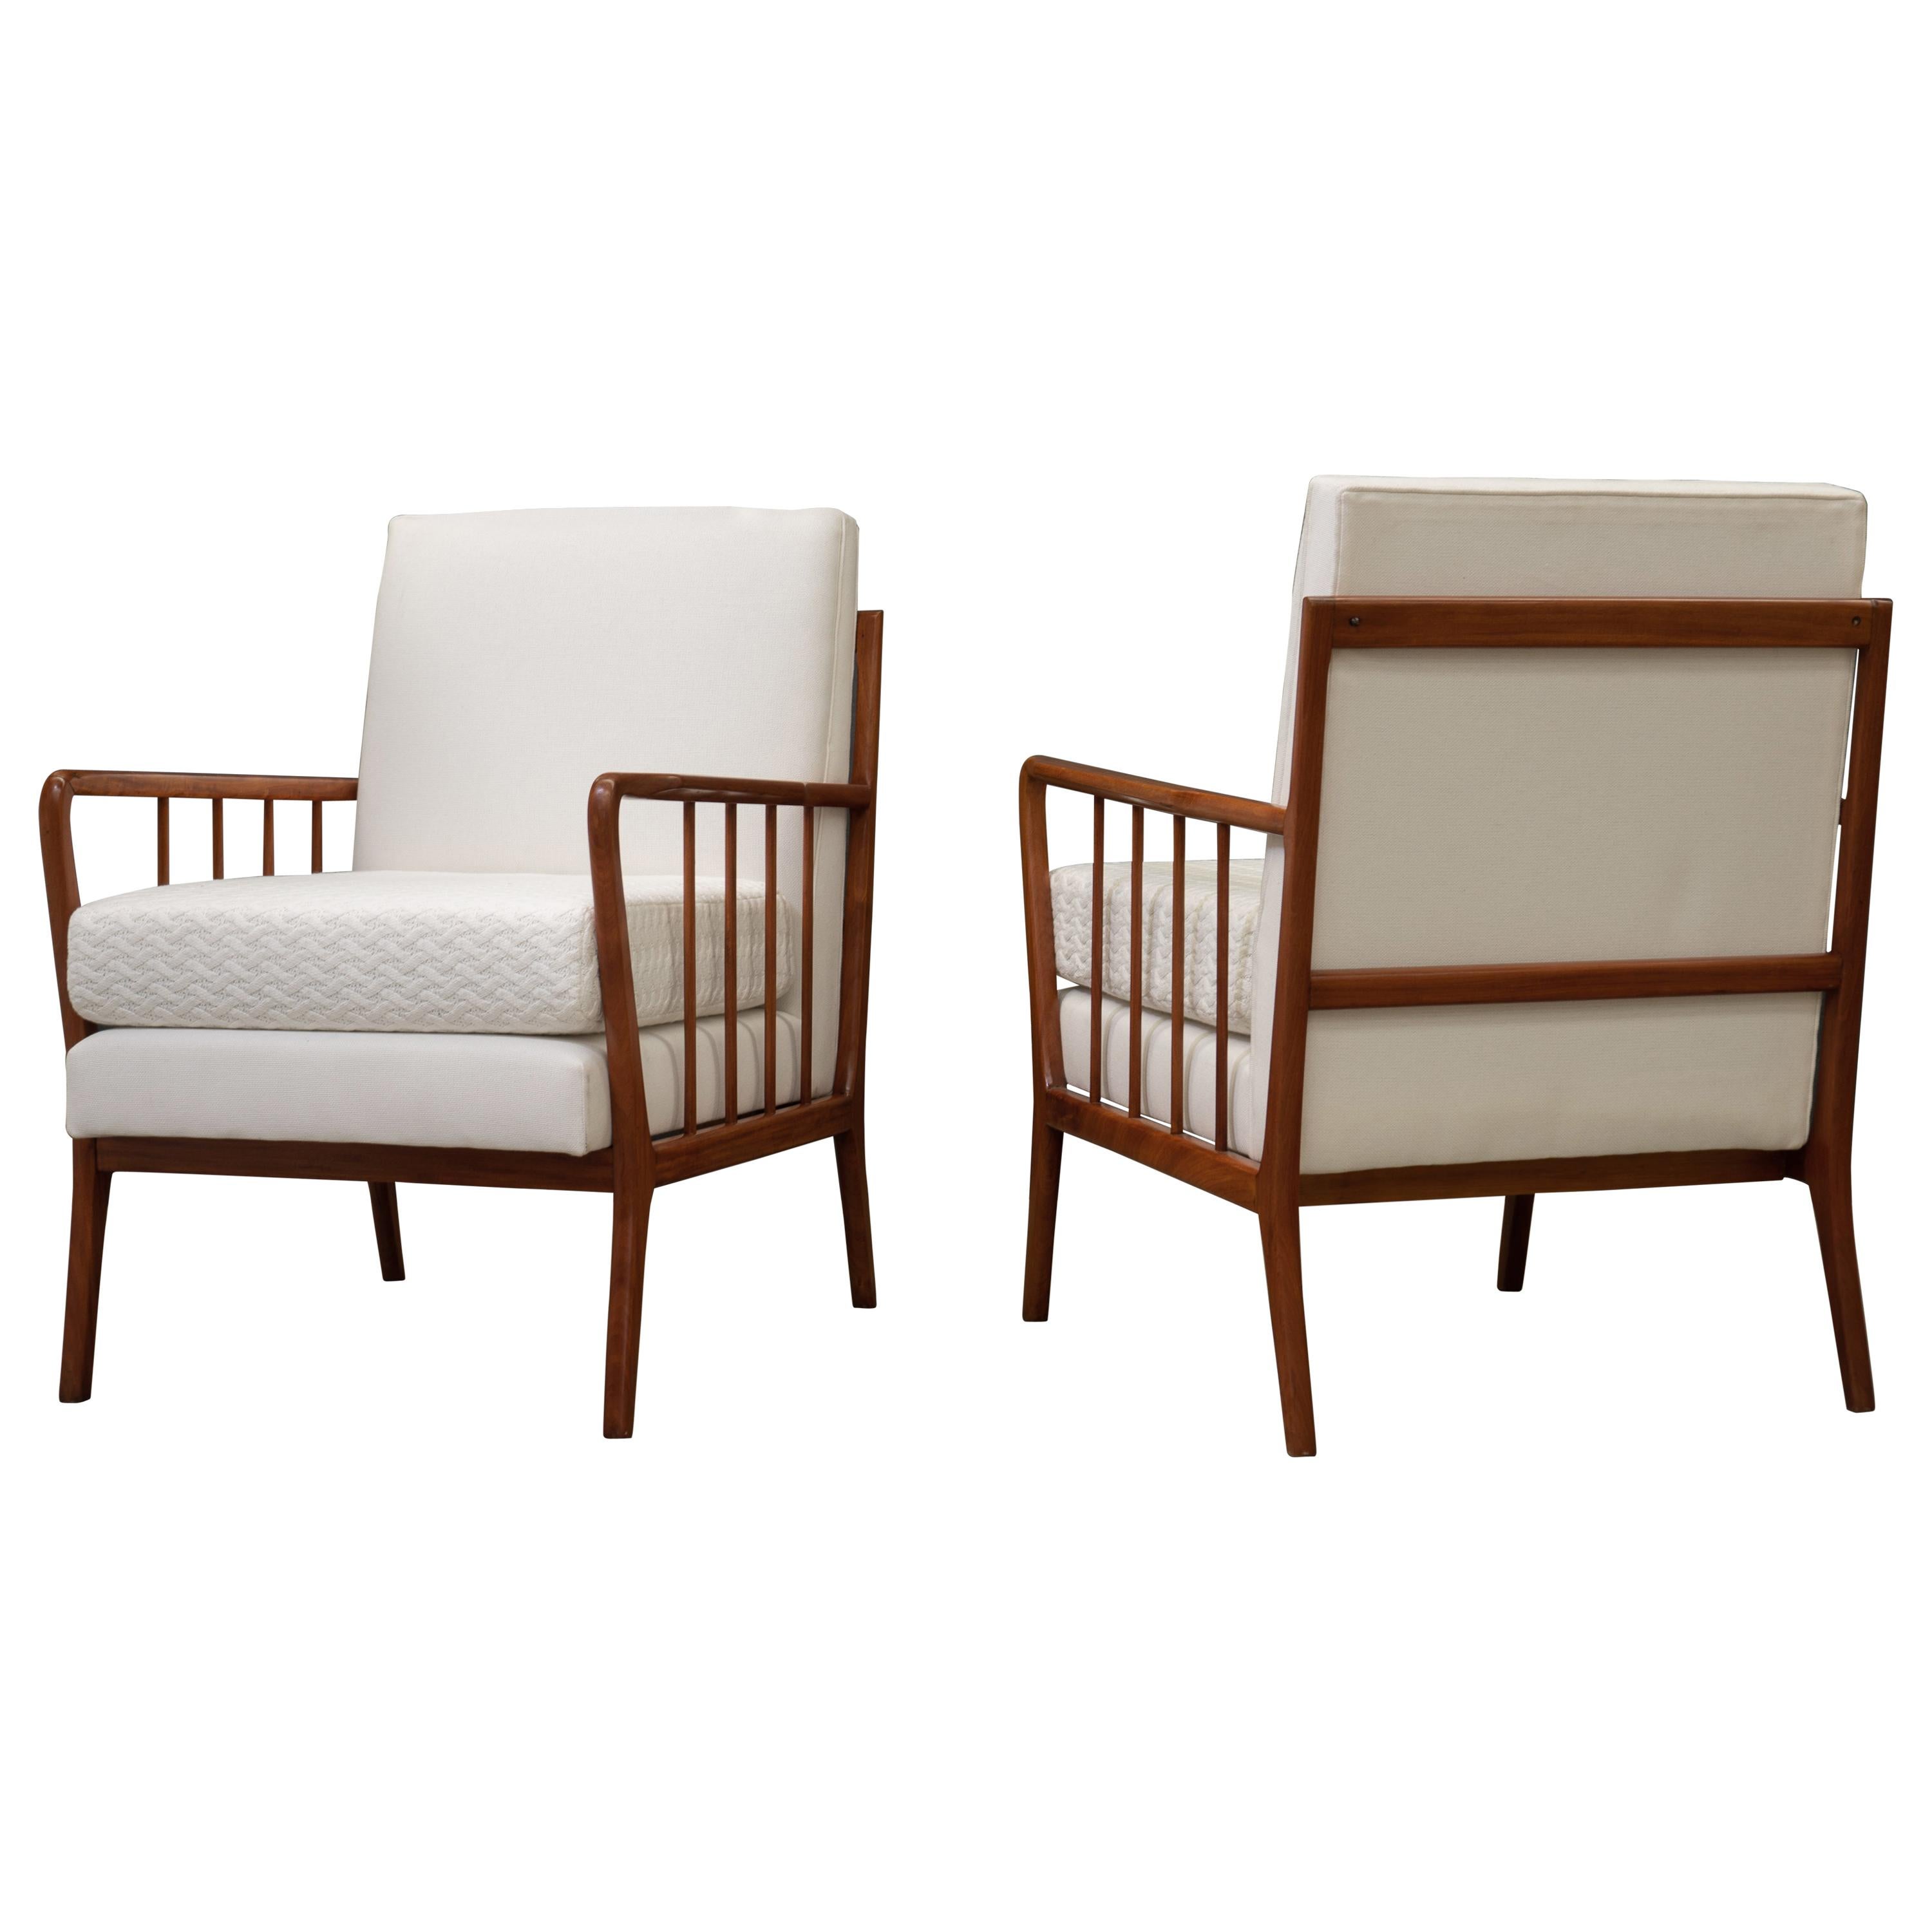 Pair of Armchairs by Rino Levi, Brazilian MidCentury Design